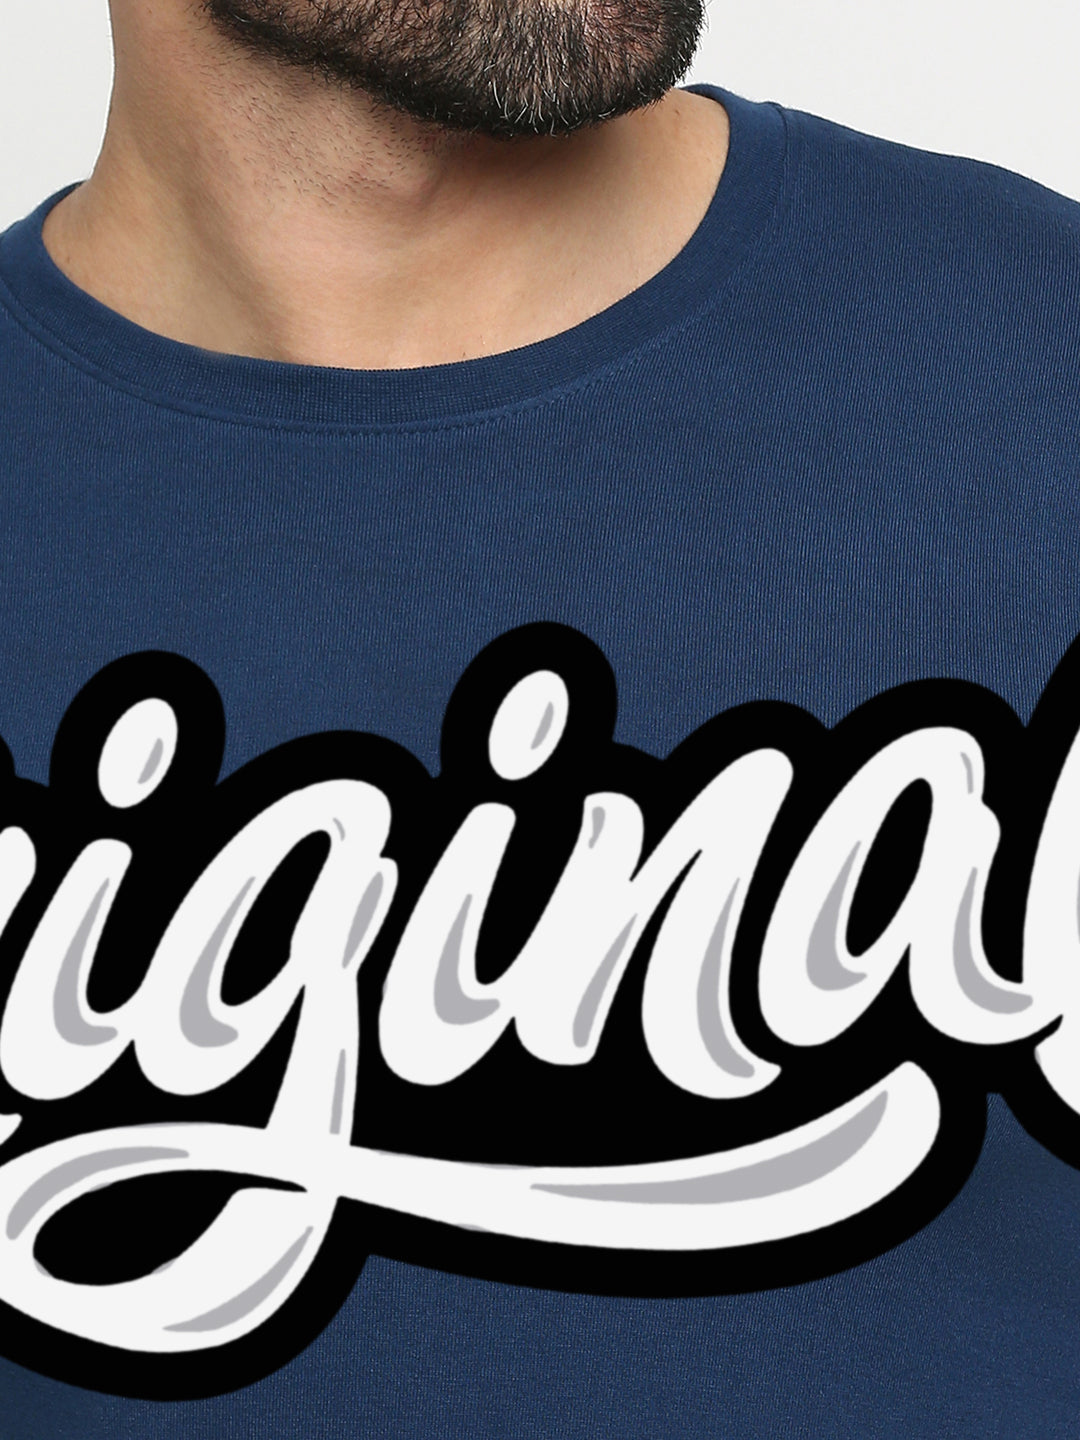 Original Typography T-Shirt